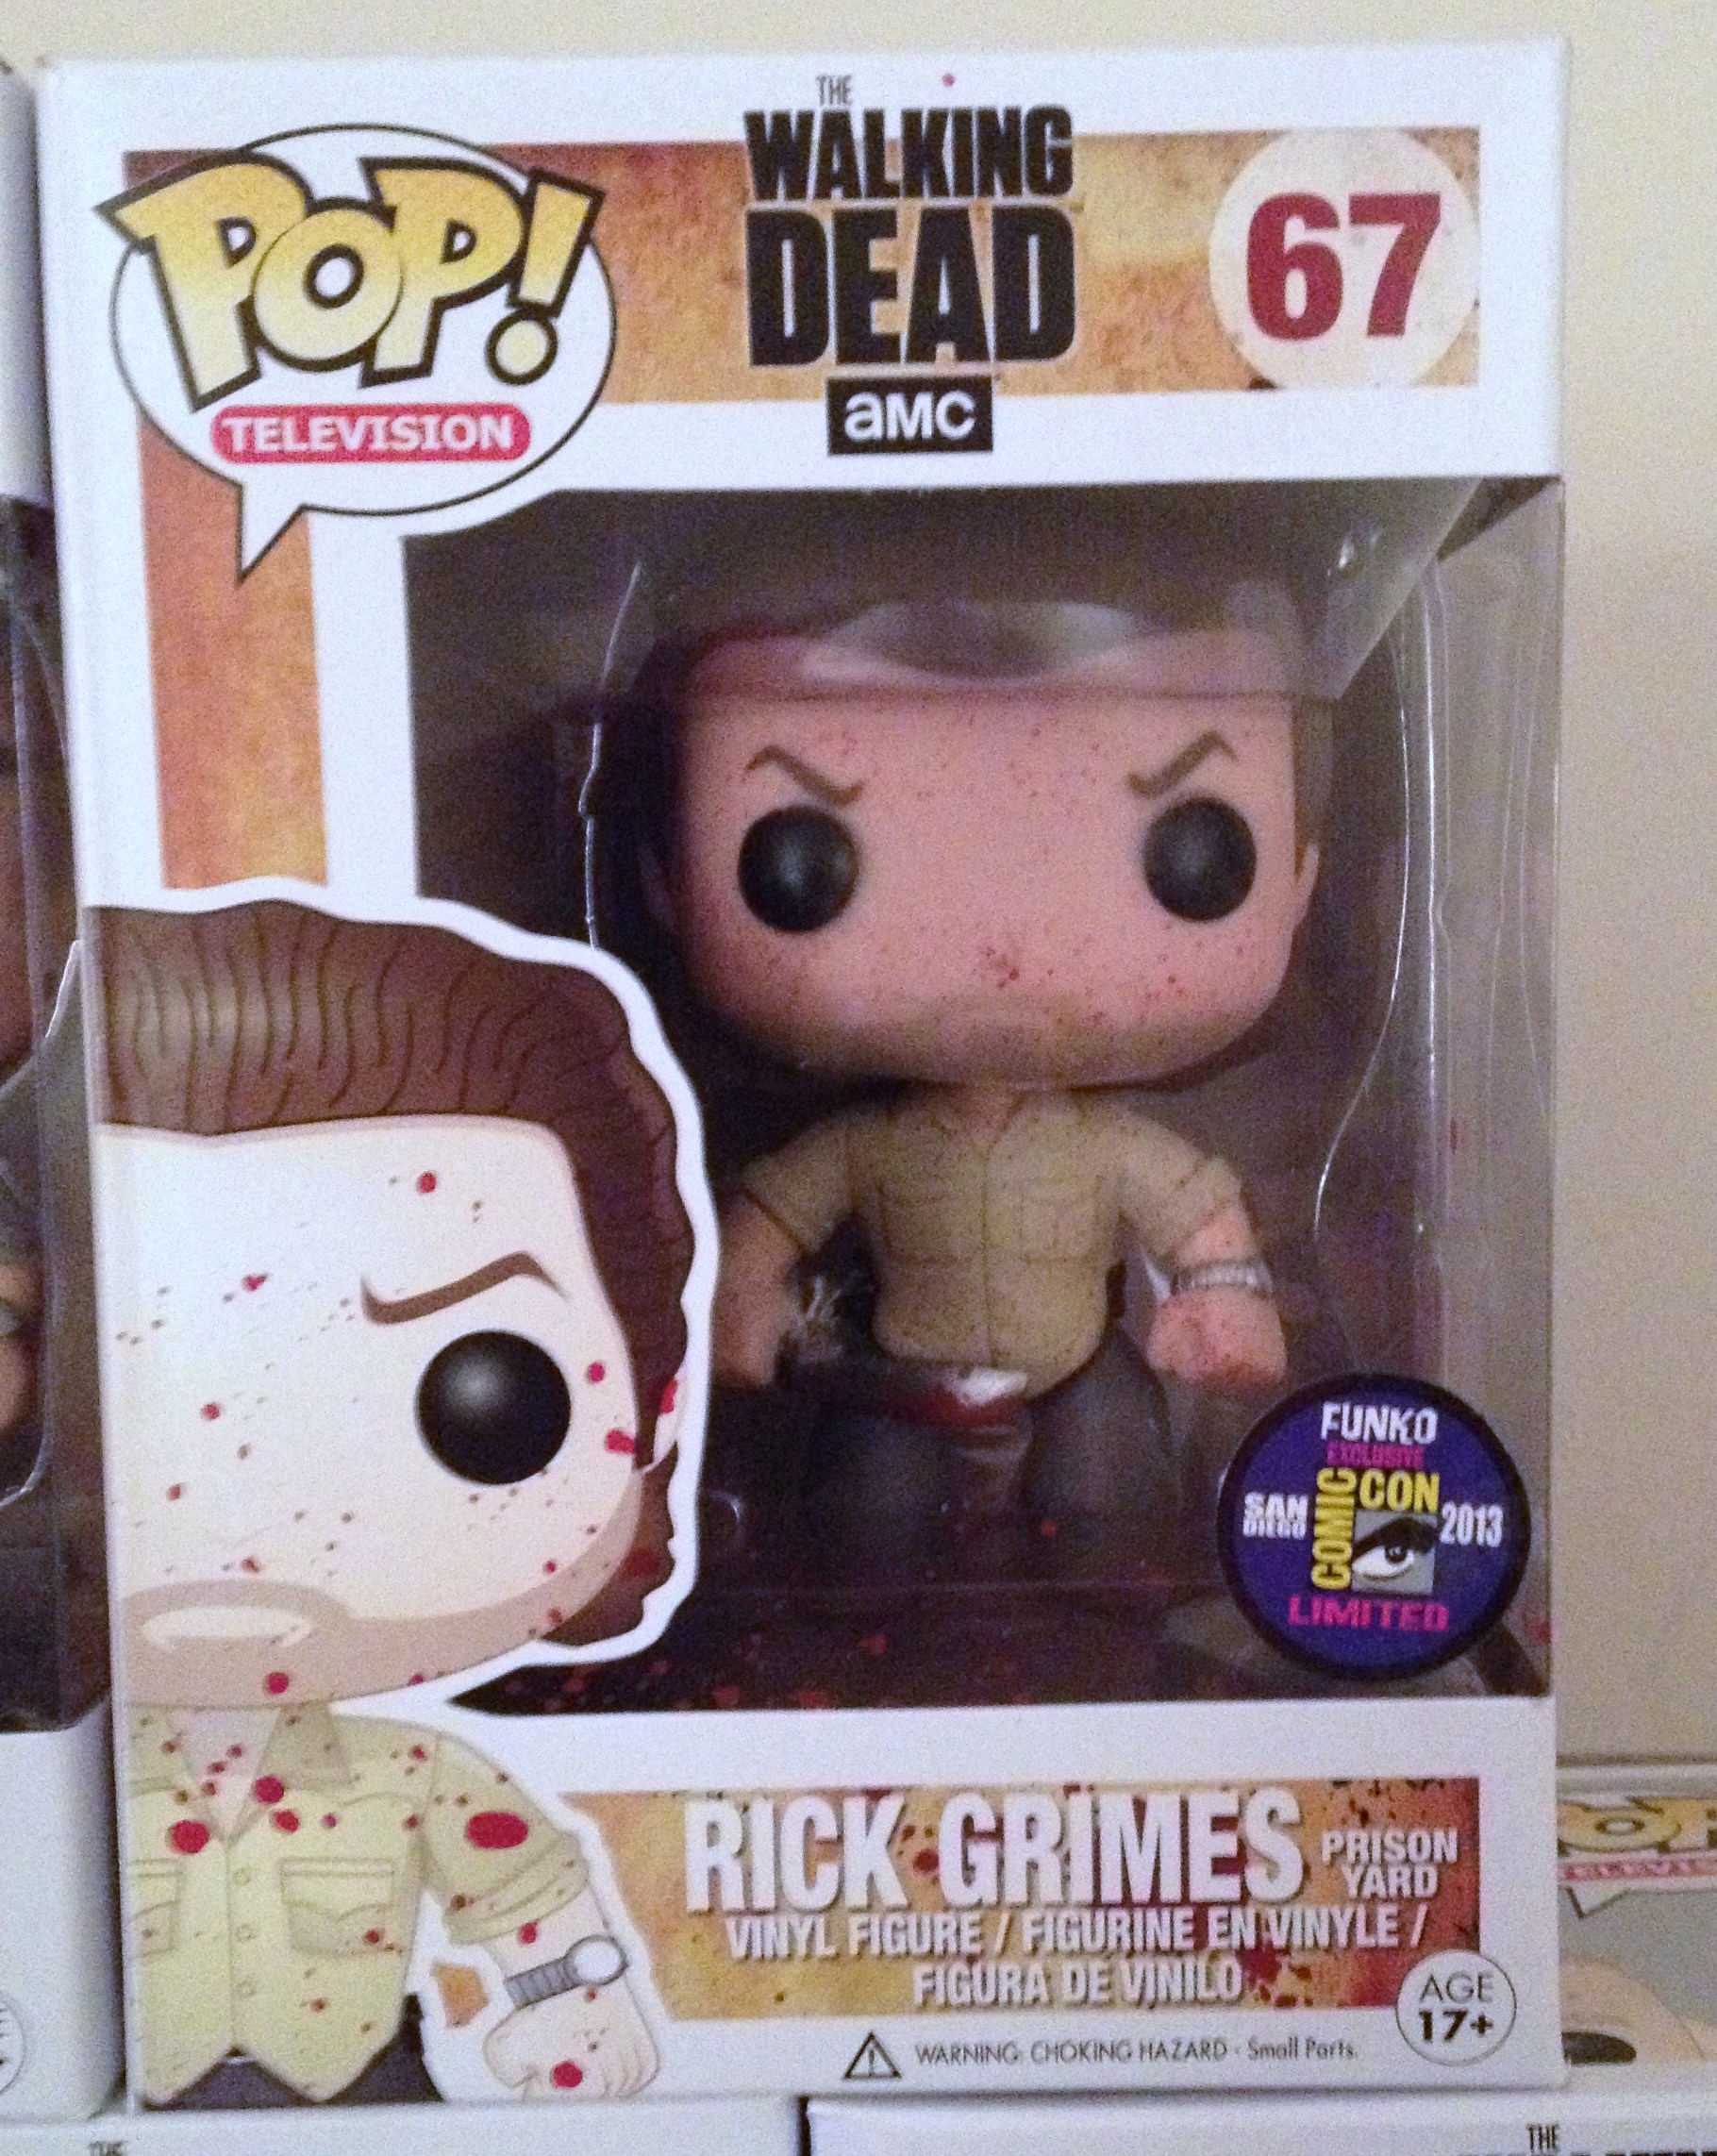 Bloody Rick Grimes